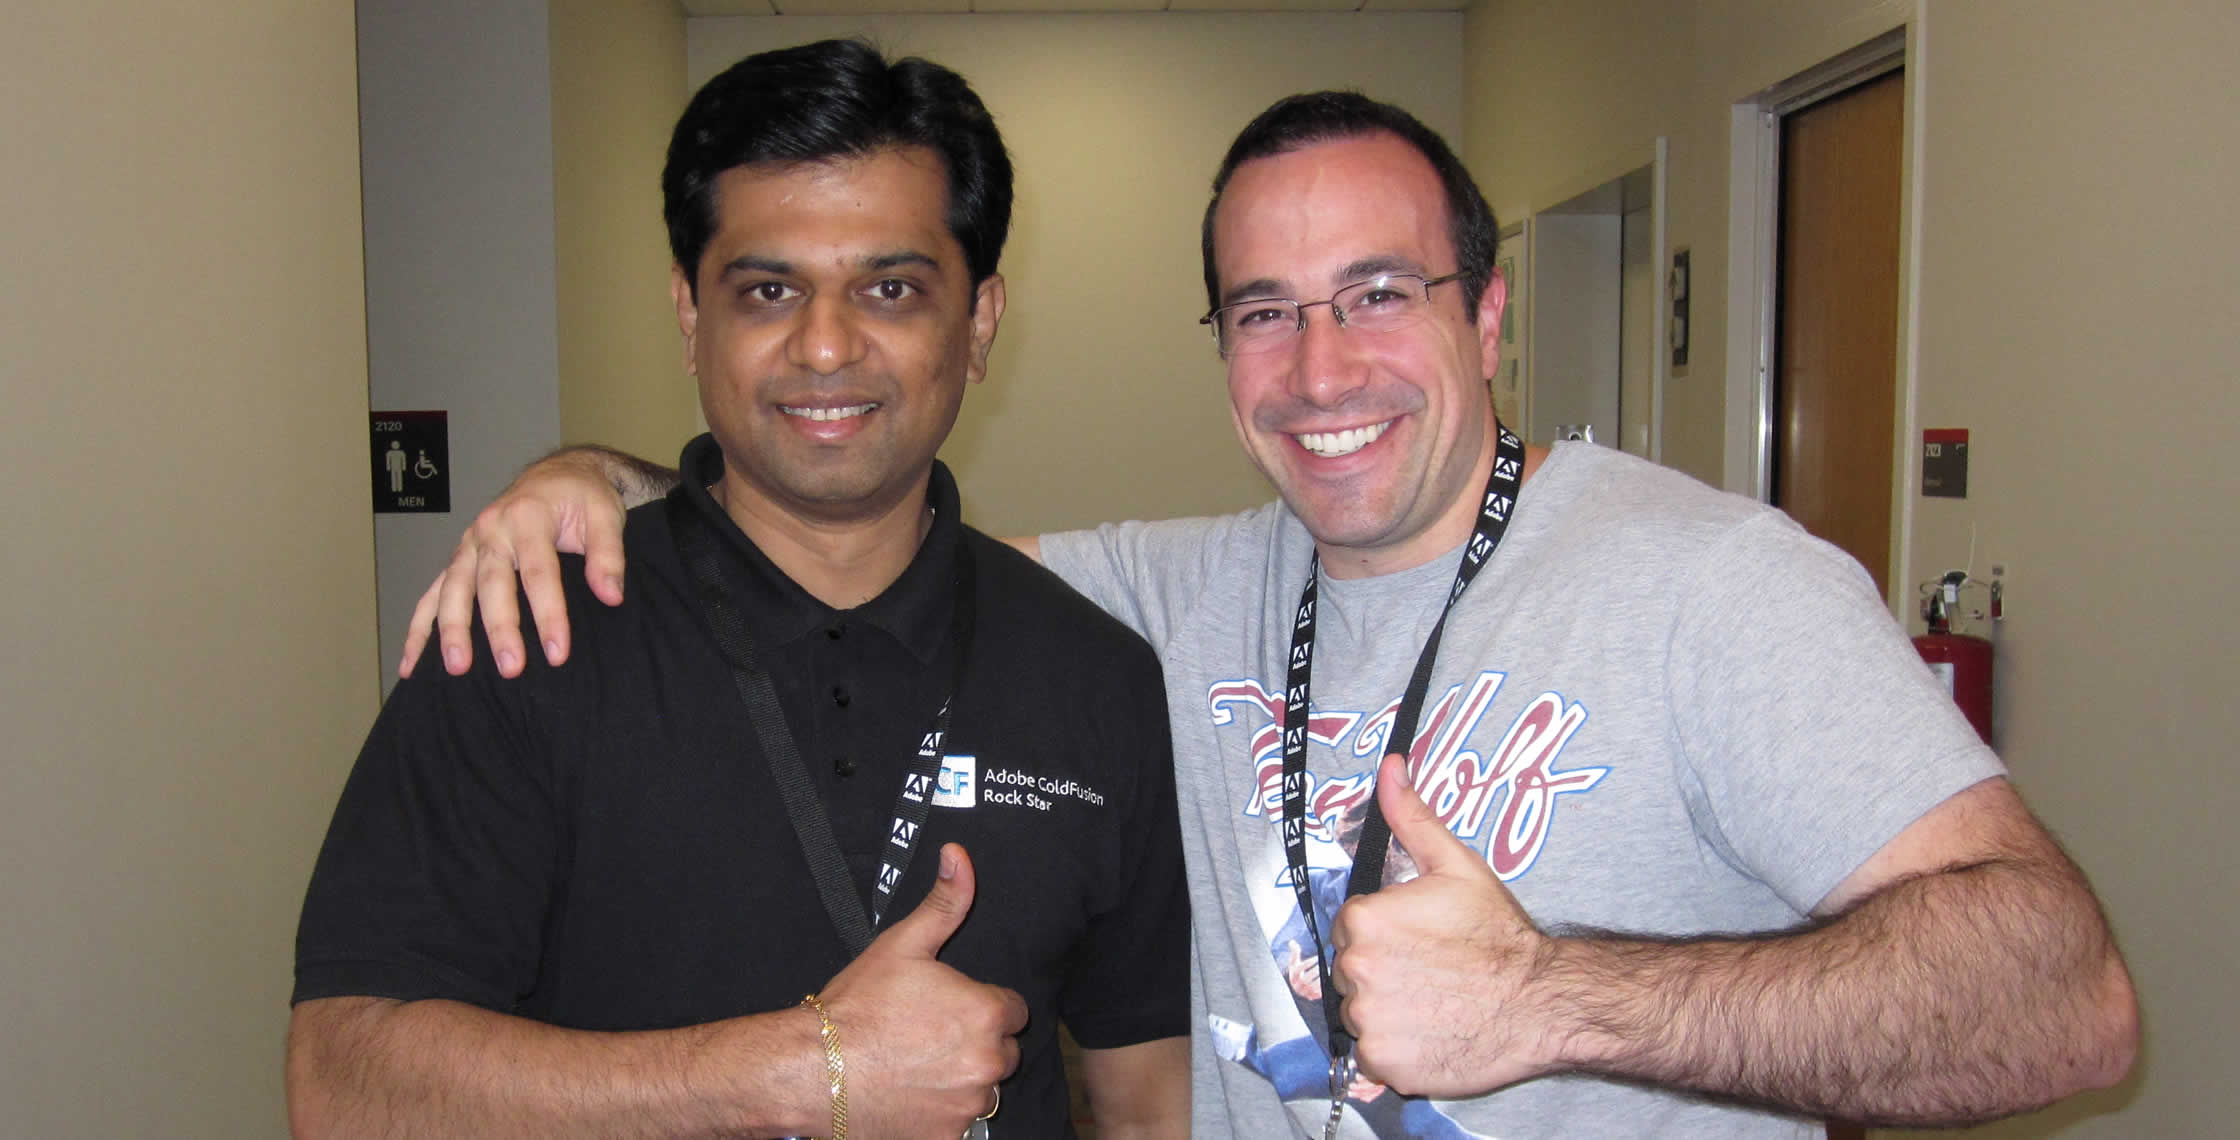 Ben Nadel at NCDevCon 2011 (Raleigh, NC) with: Ramchandra Kulkarni